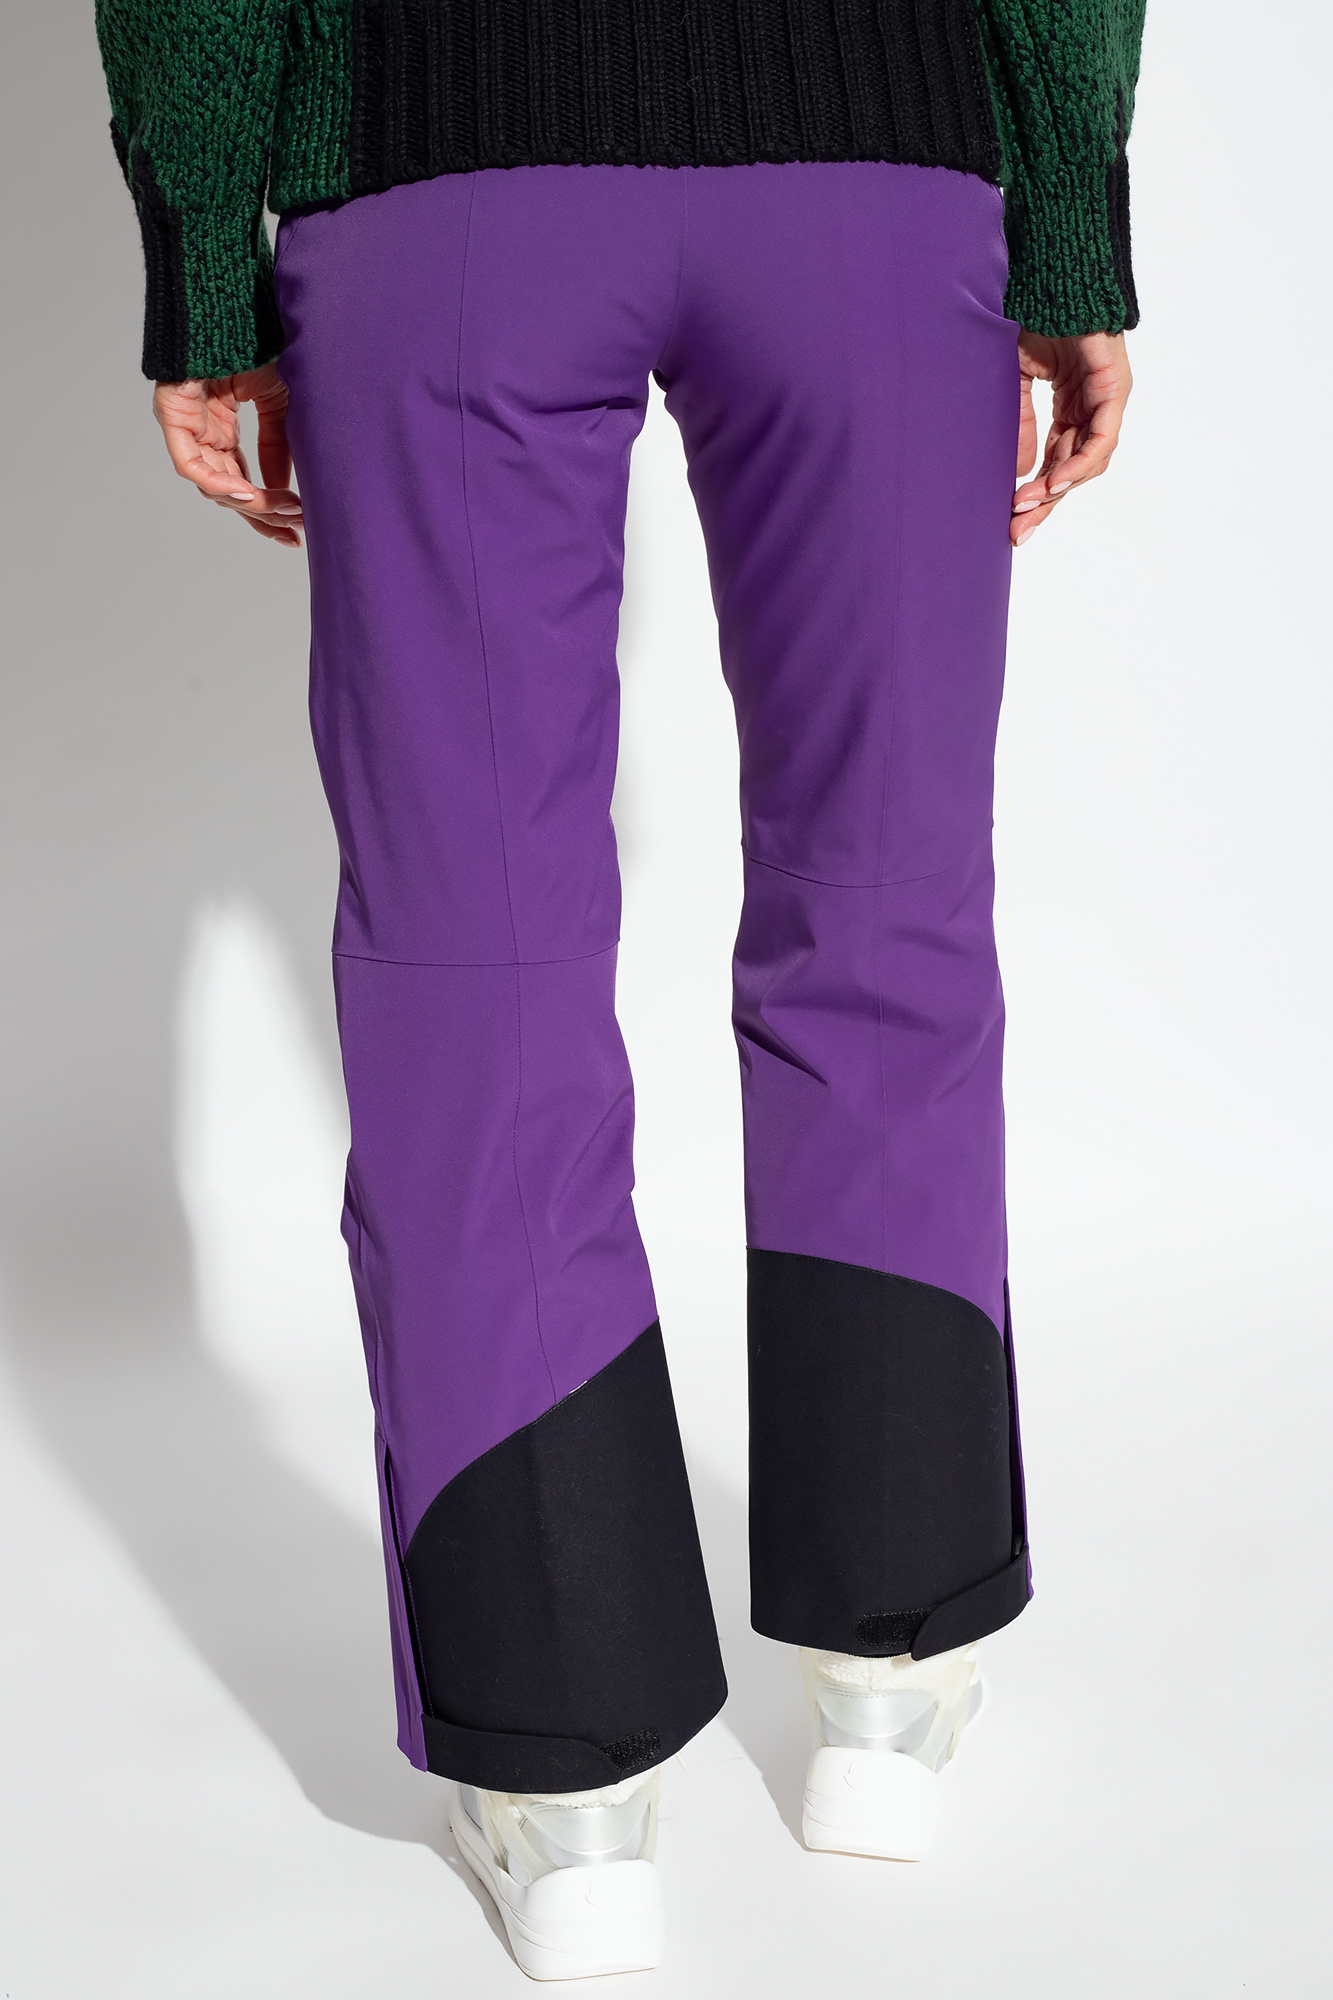 Apana Women's Athleisure Multi Pocket Woven Pants